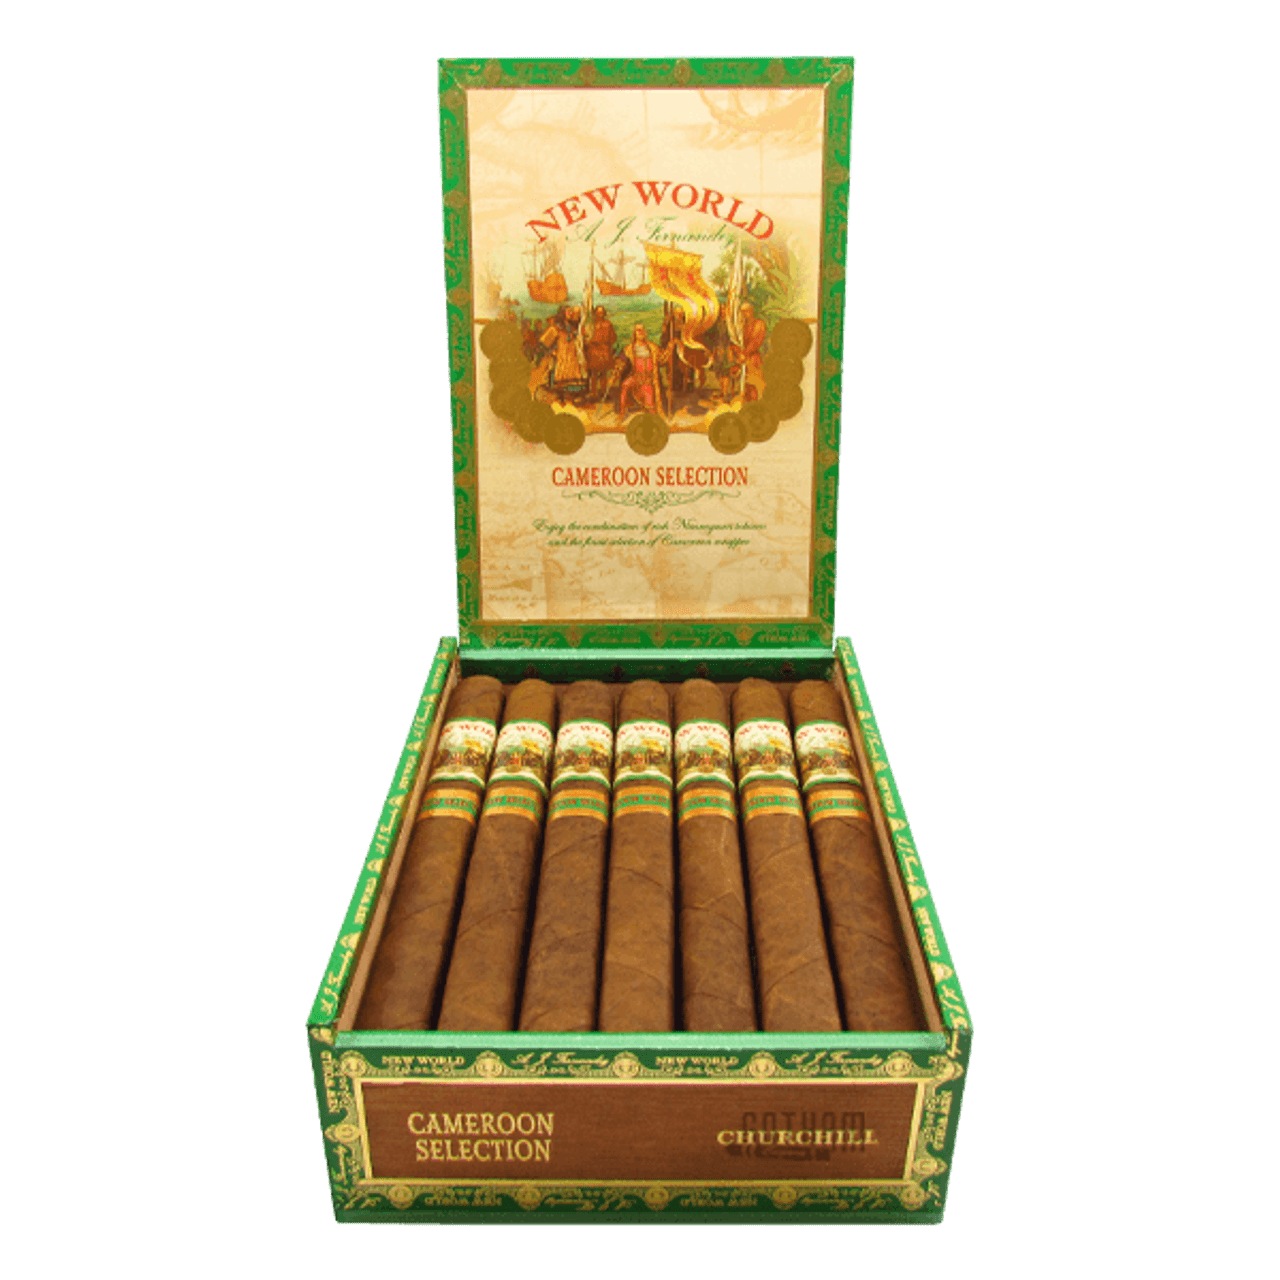 New World Cameroon Churchill Gotham Cigars